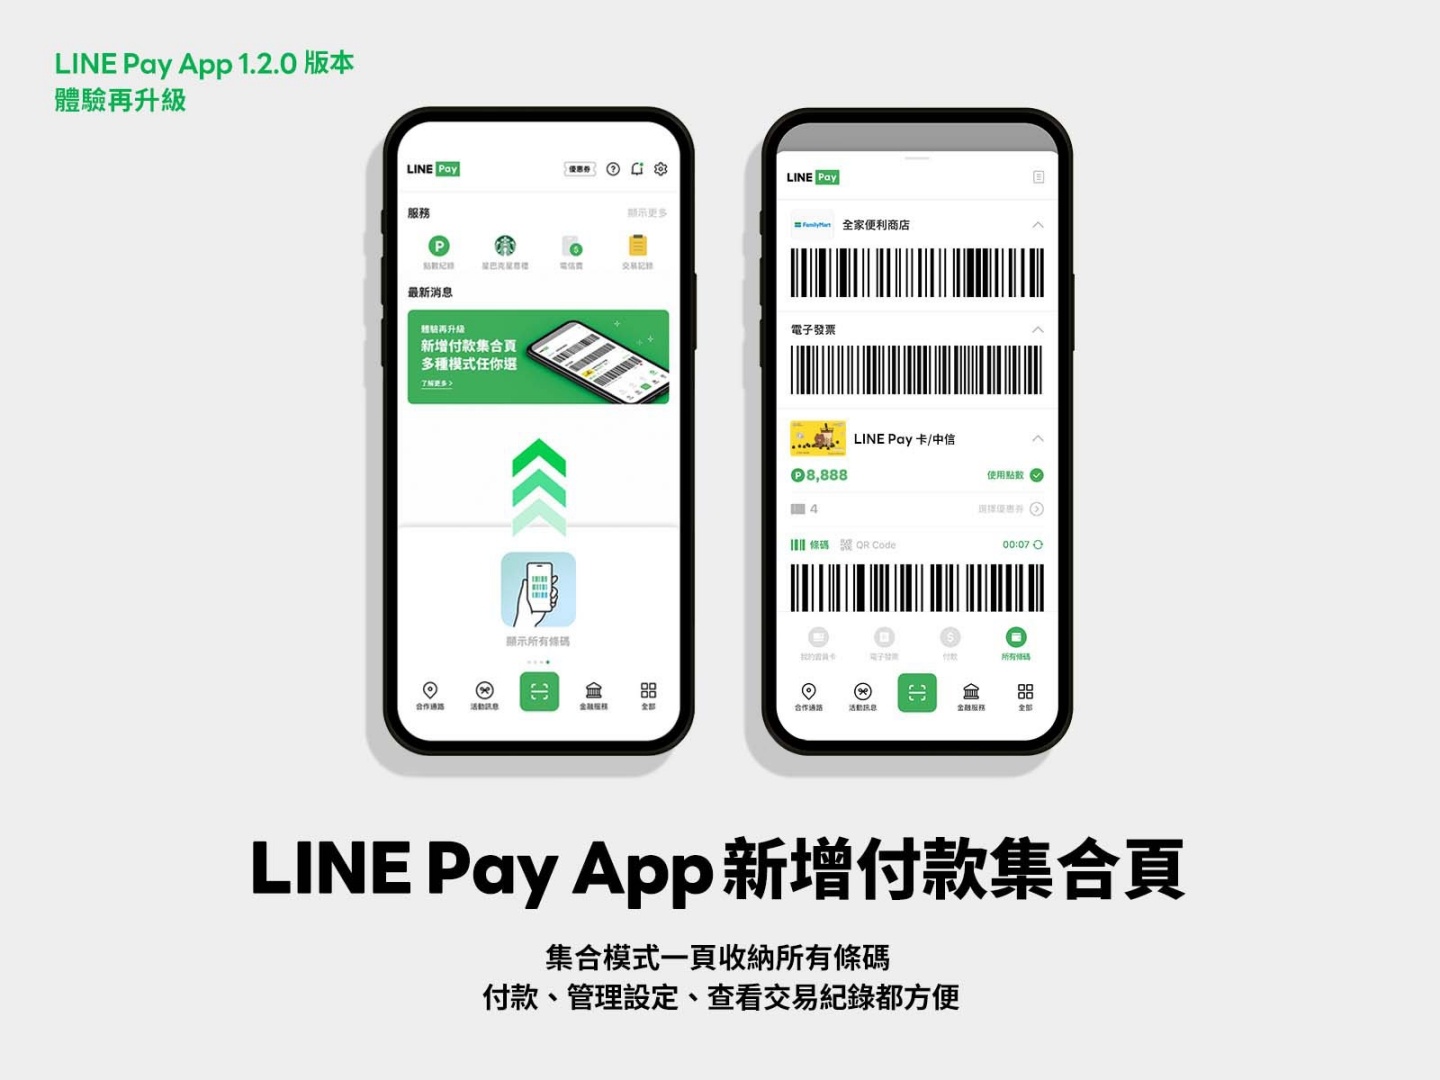 LINE Pay App 迎來更新！舊版 5/31 將退場，想用一卡通支付要從 LINE 錢包開啟才行